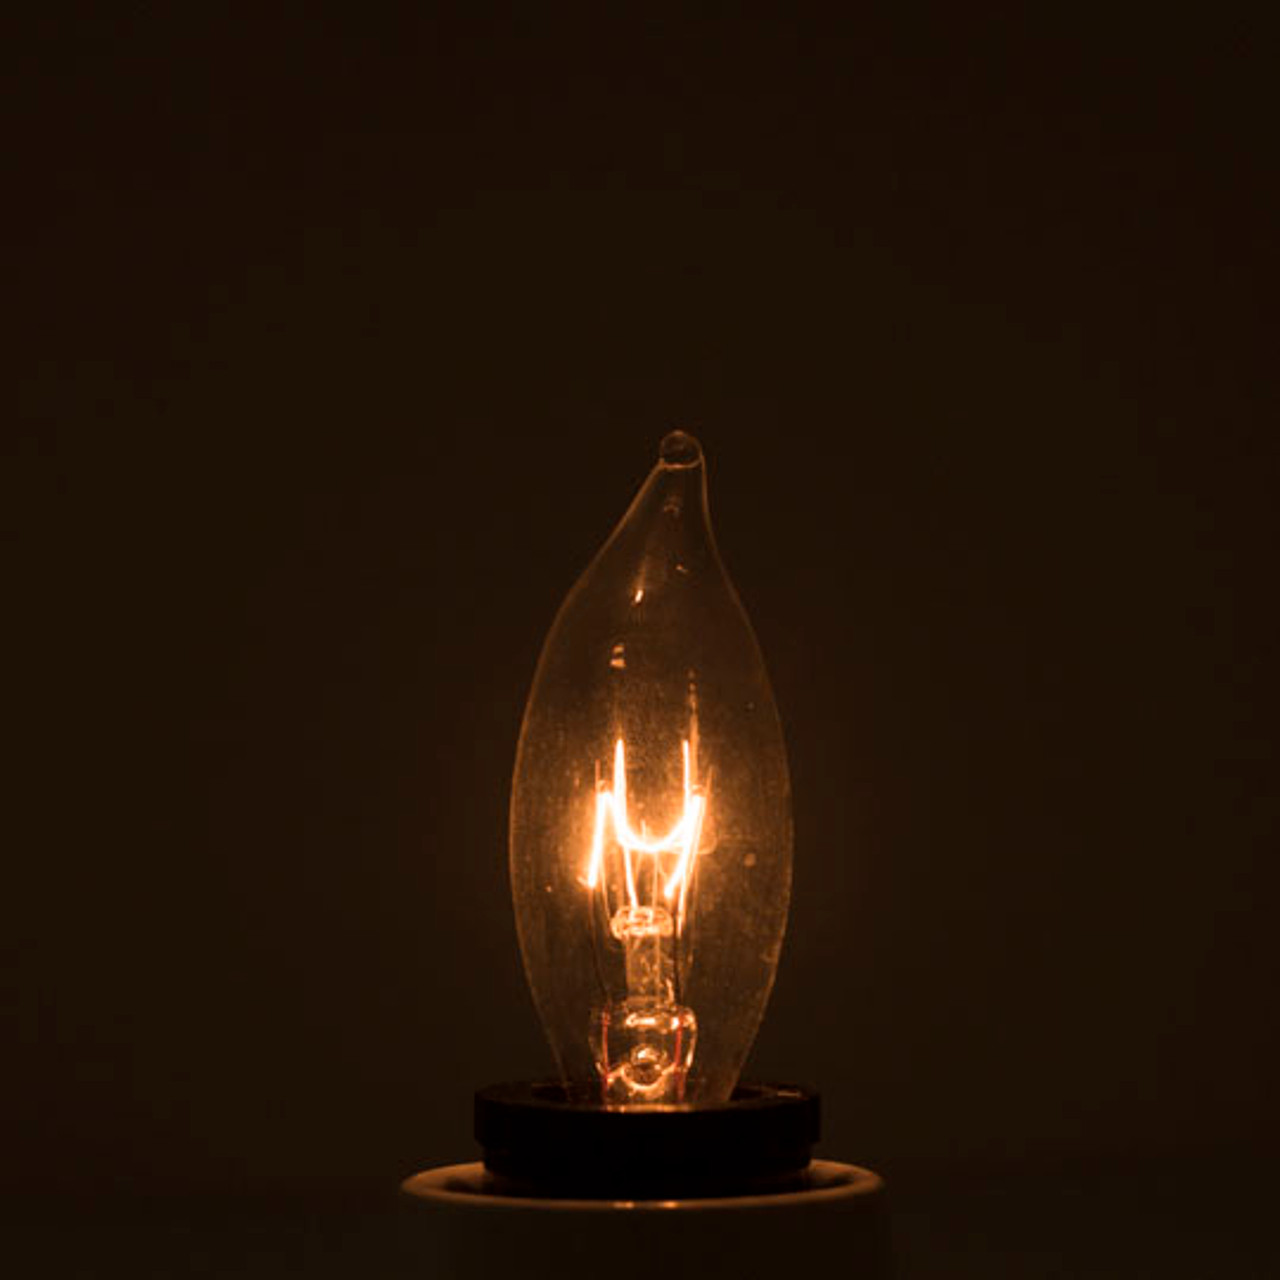 15W clear flame tip candleabra base light bulb